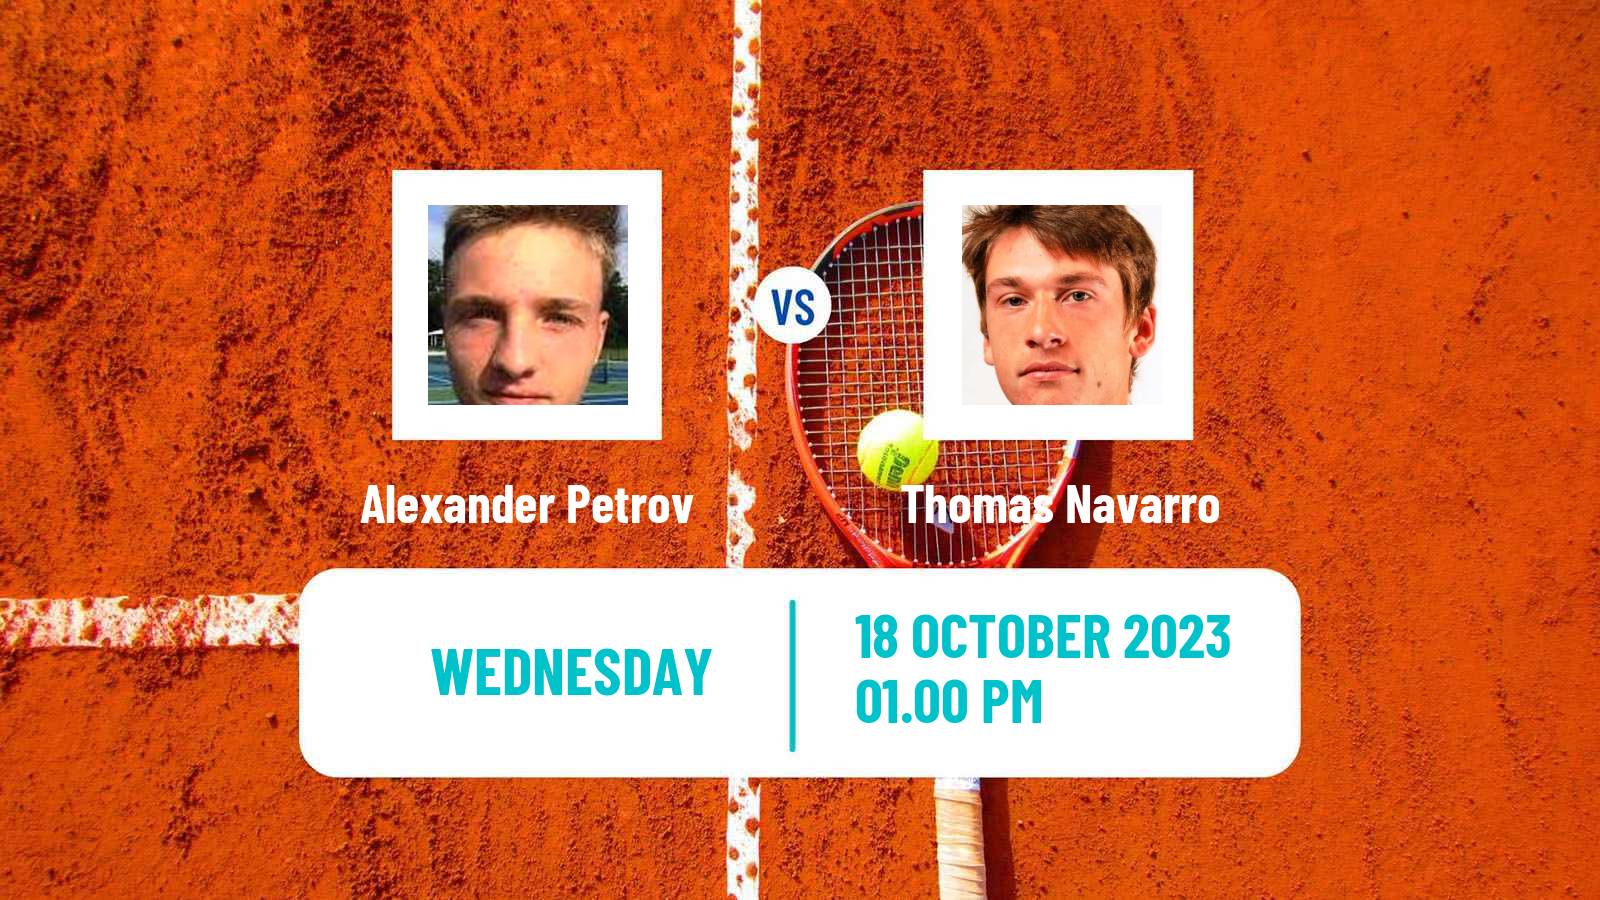 Tennis ITF M15 Las Vegas Nv Men Alexander Petrov - Thomas Navarro